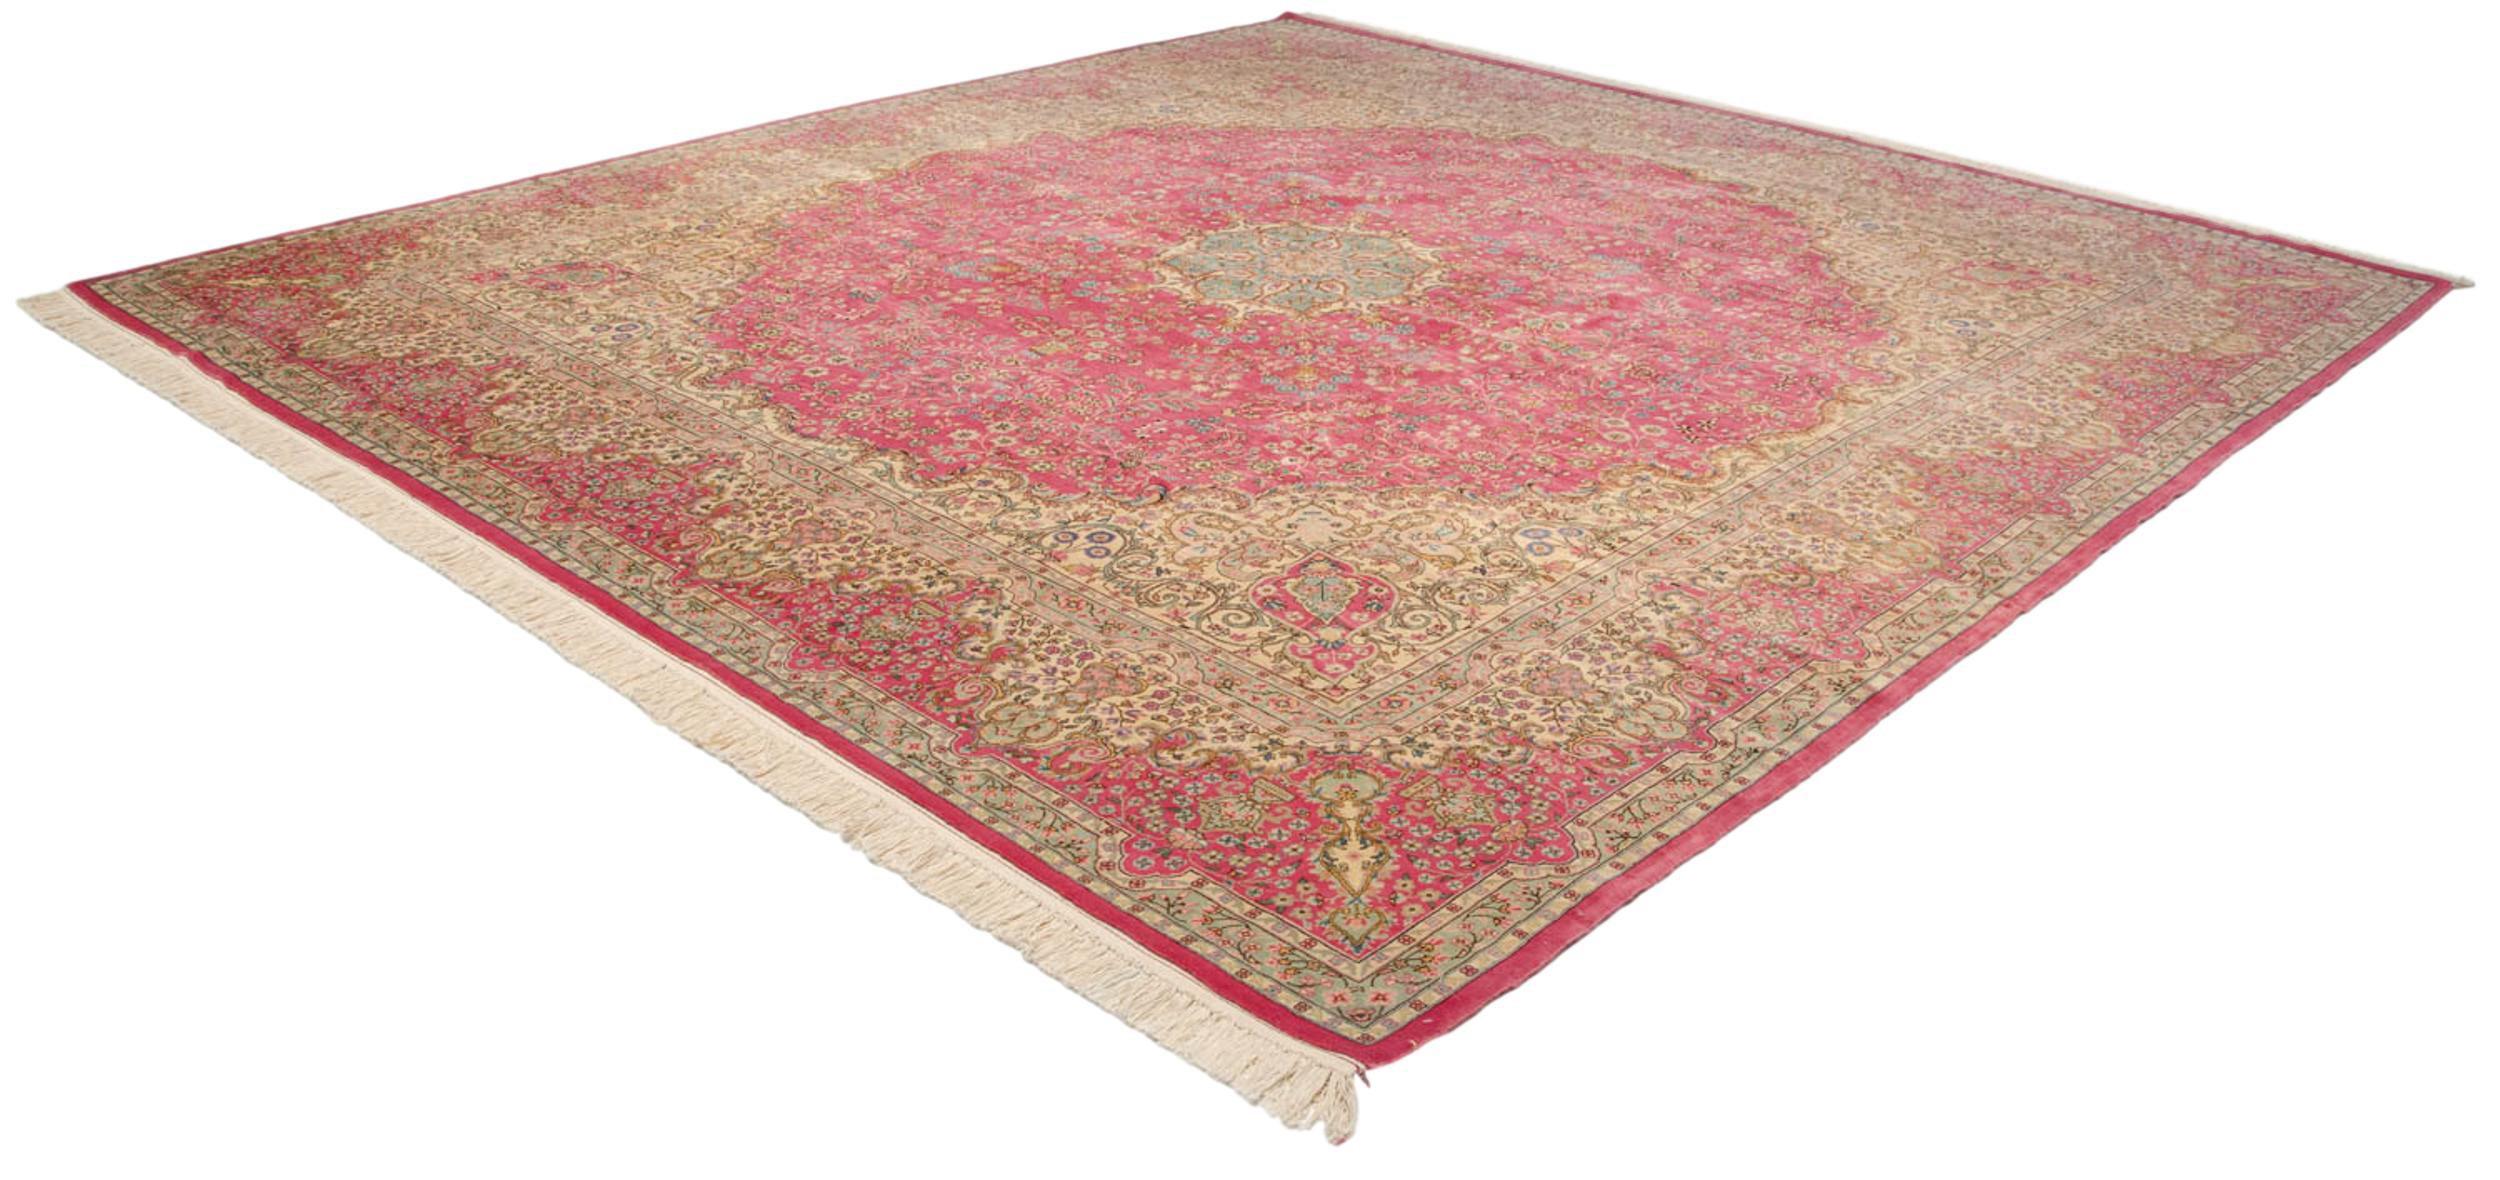 Vintage Bulgarian Kerman Design Square Carpet In Good Condition For Sale In Katonah, NY